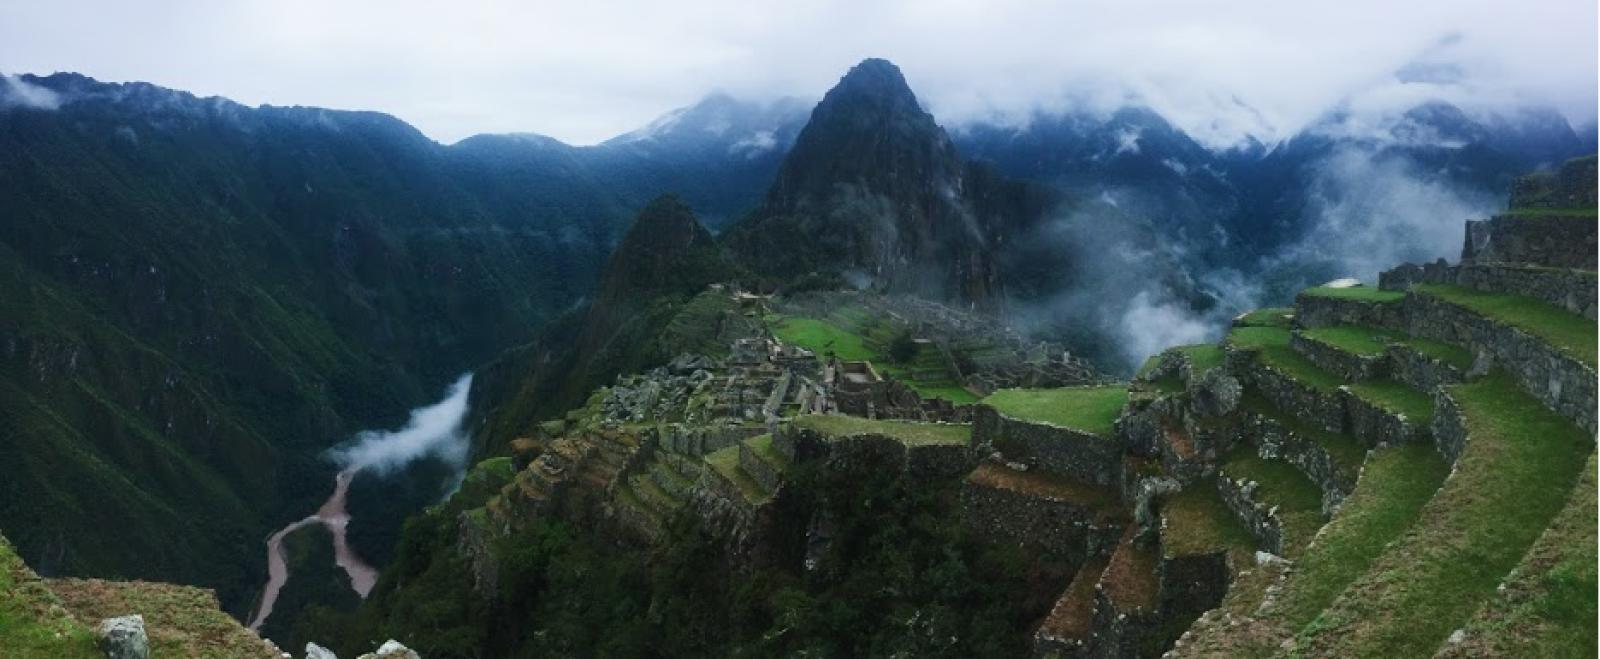 Off-season travel in Peru